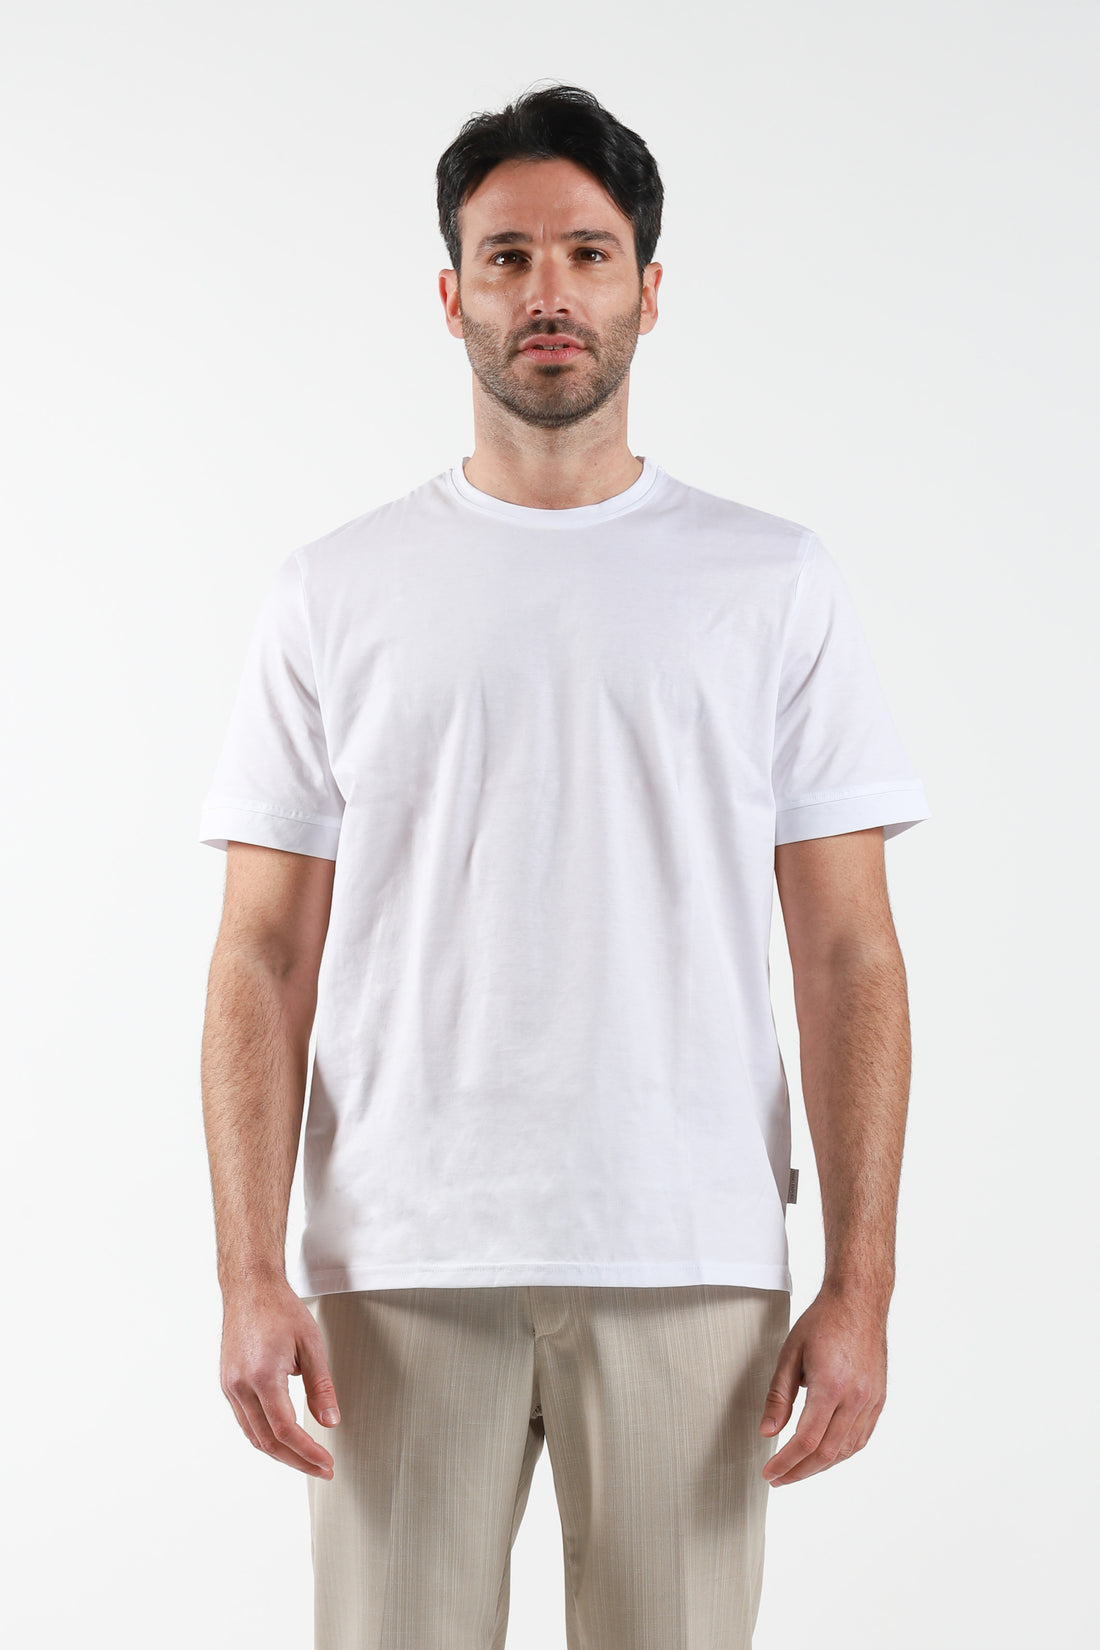 Scotland Yarn round neck T-Shirt - White